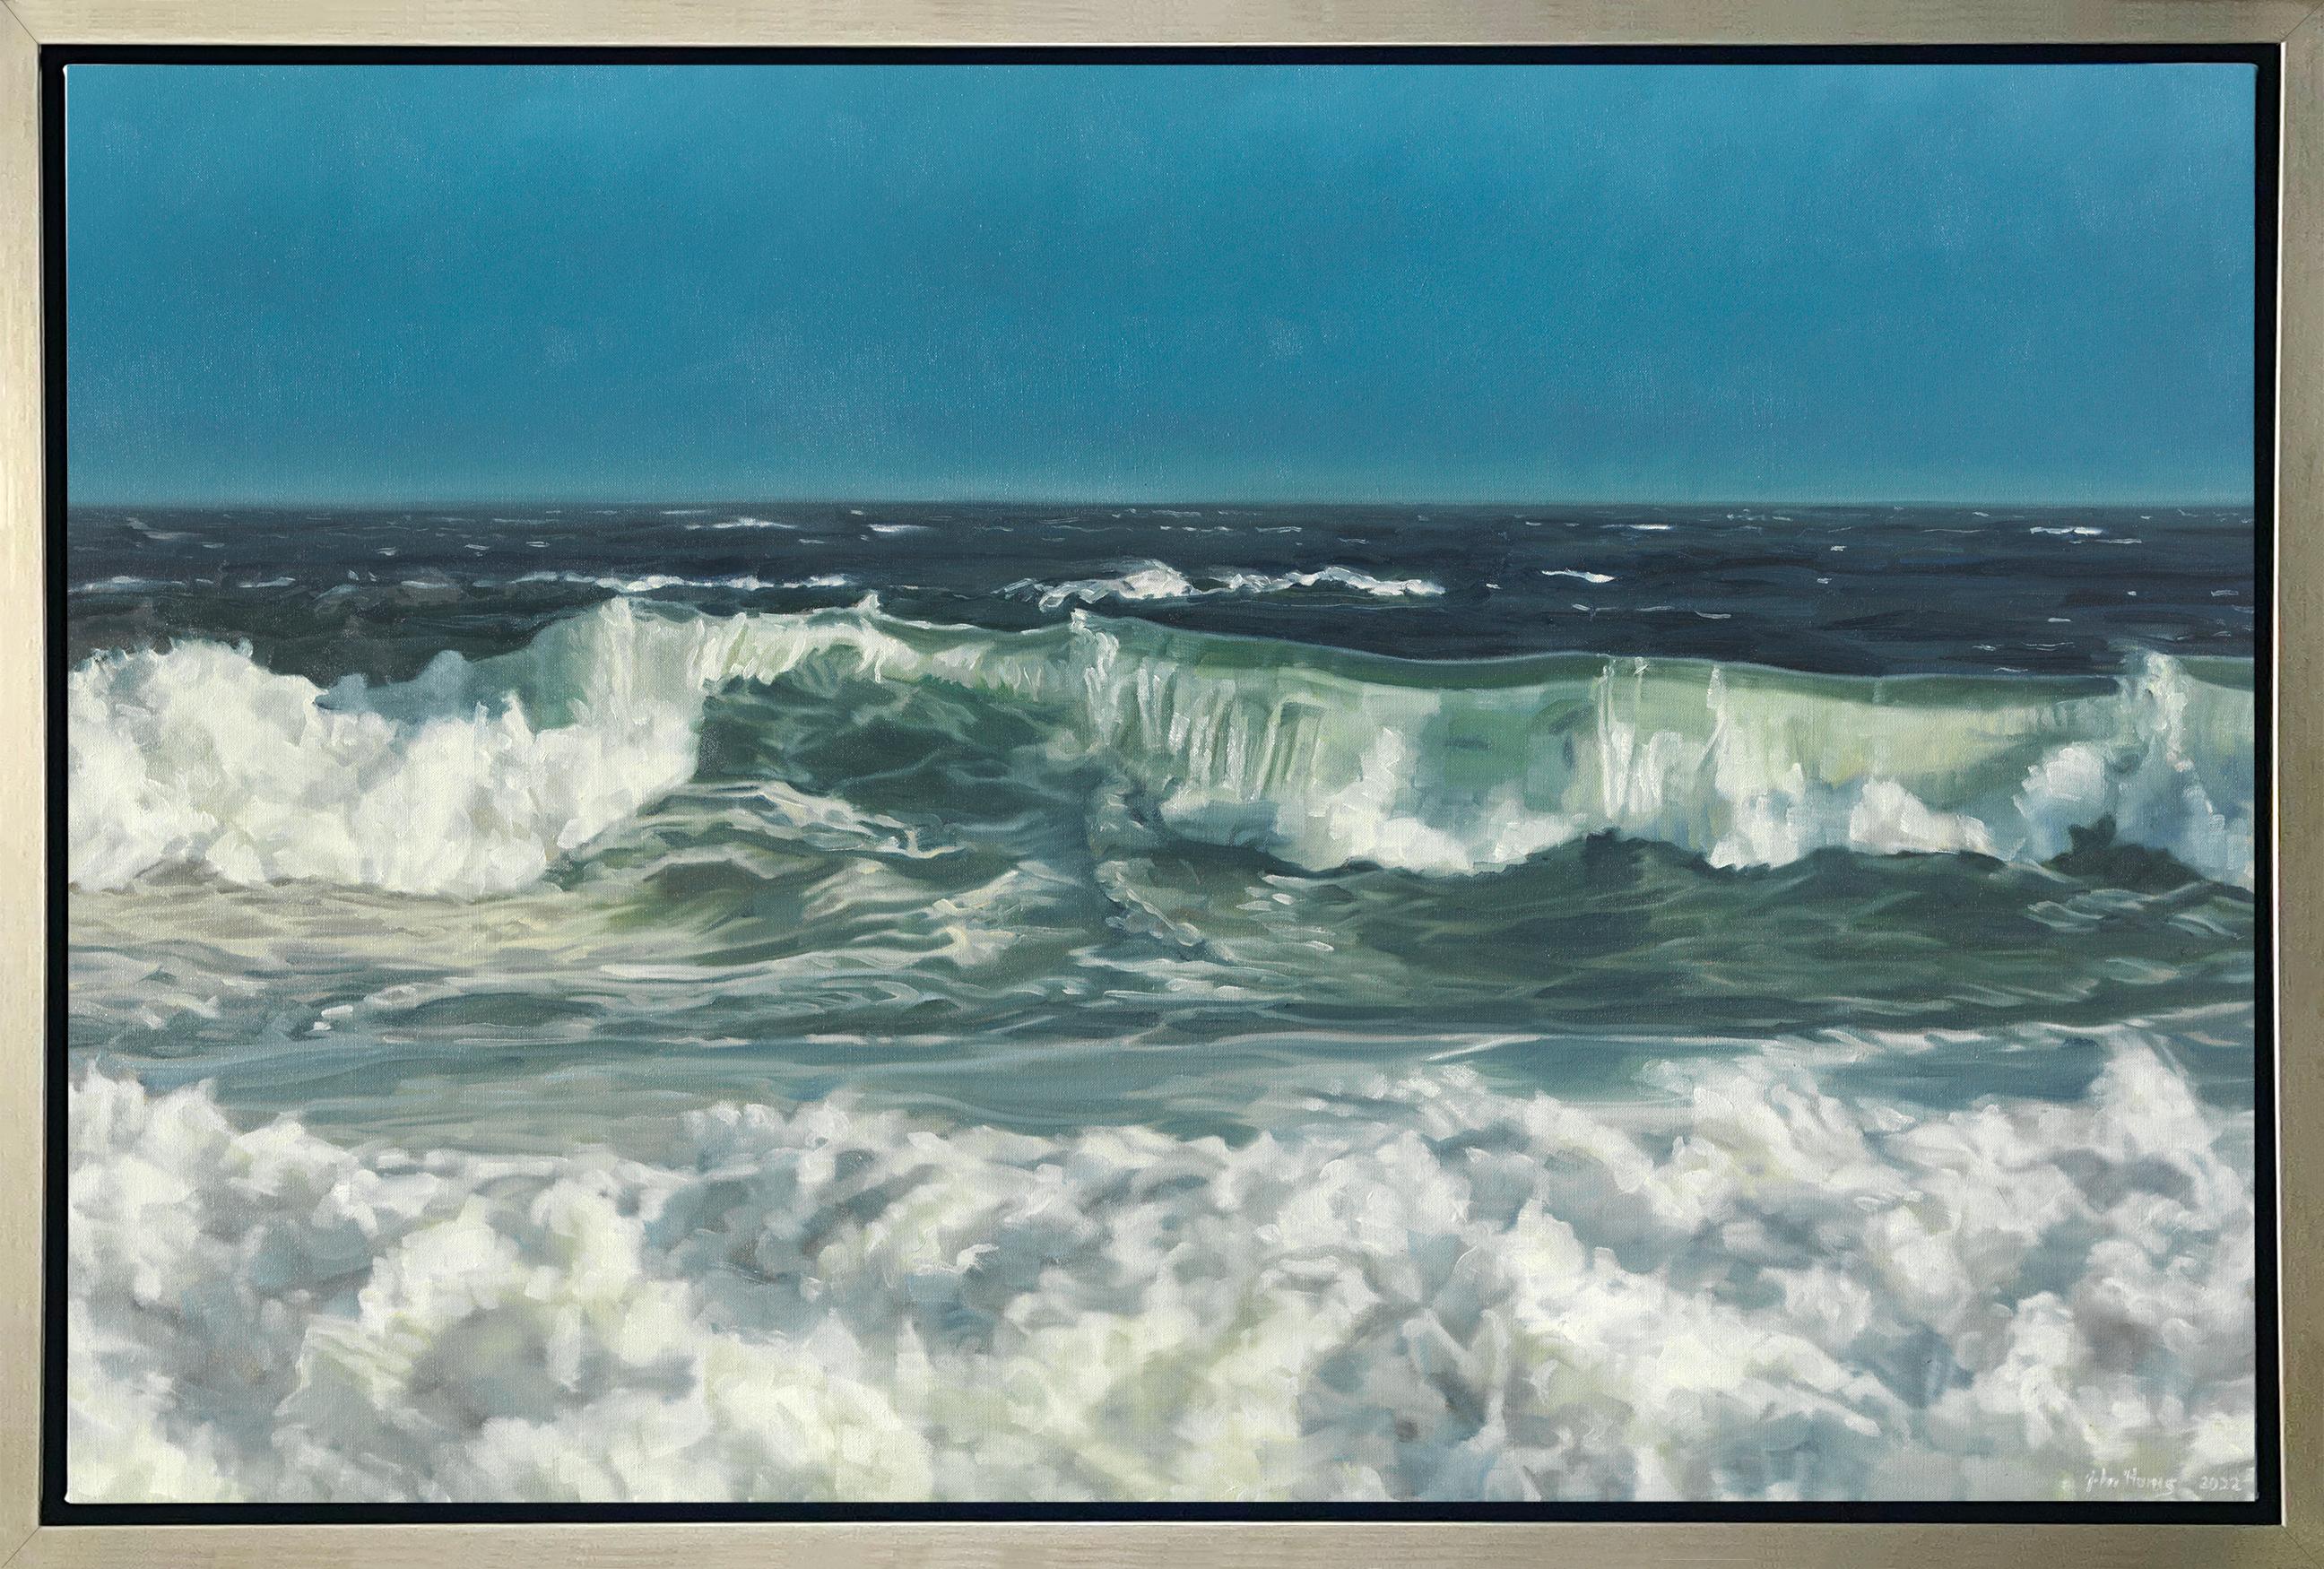 John Harris (painter) Landscape Print - "Curler, " Framed Limited Edition Giclee Print, 40" x 60"